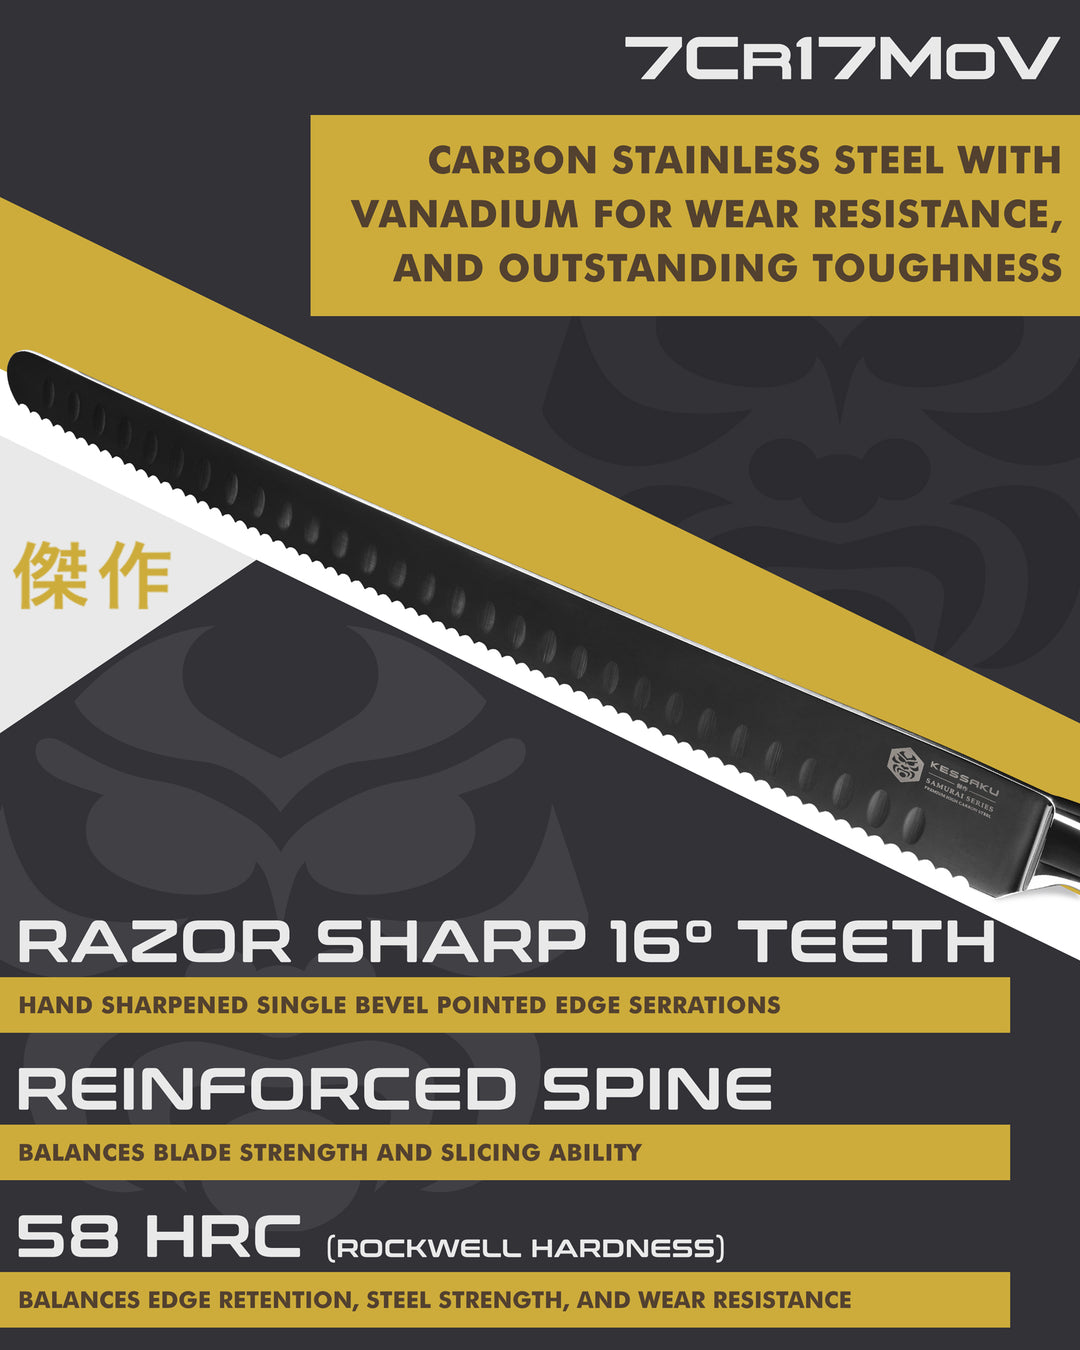 Kessaku Samurai Serrated Carving Knife blade features: 7Cr17MoV steel, 58 HRC, 16 degree edge, reinforced spine